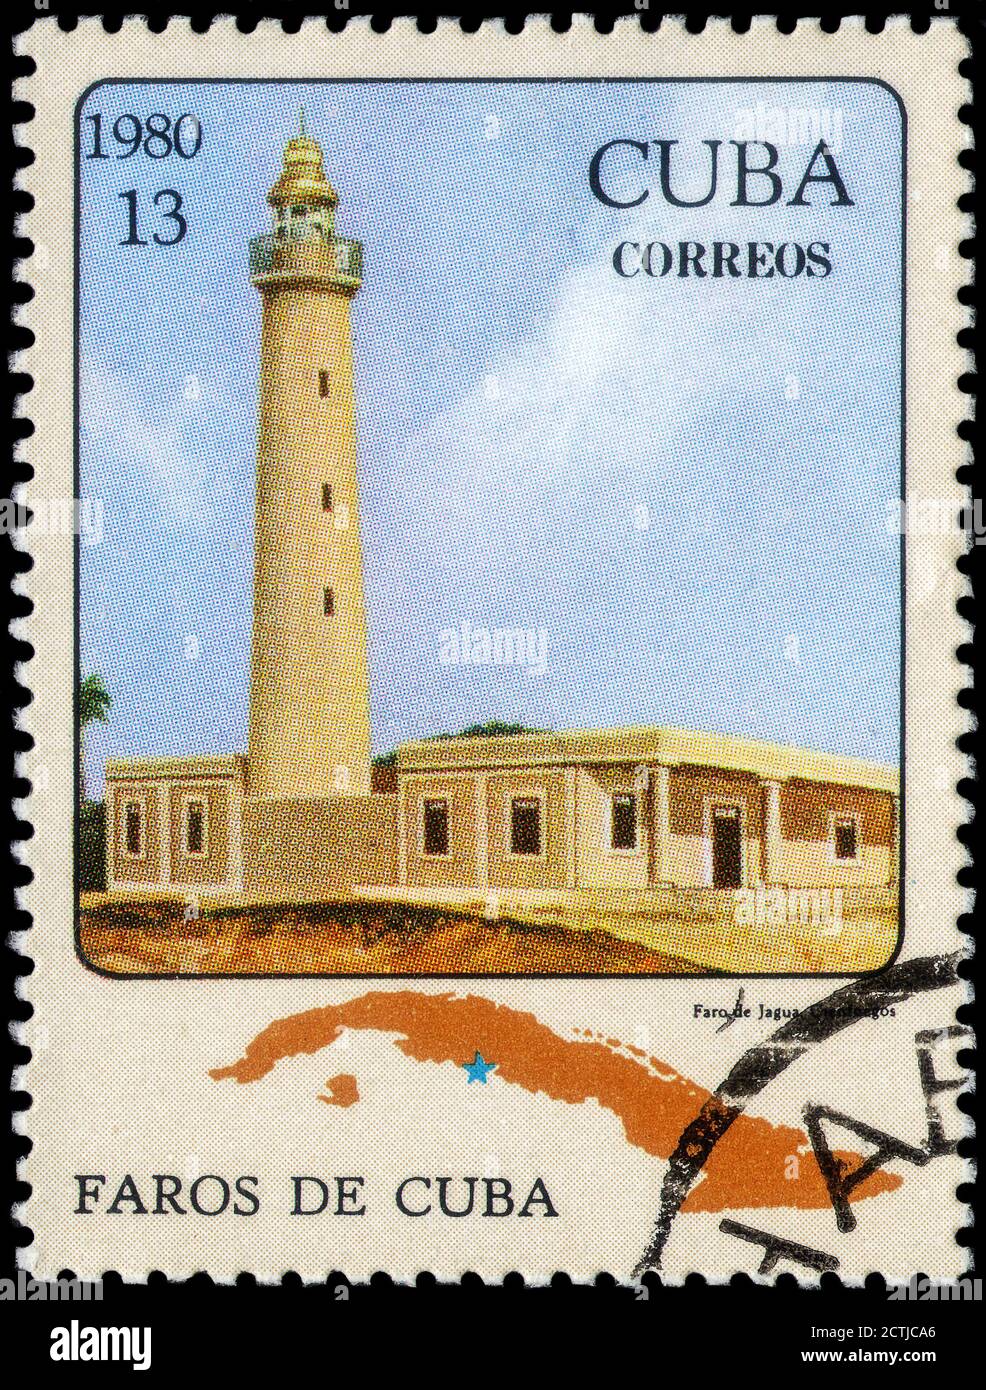 Sankt Petersburg, Russland - 31. Mai 2020: Briefmarke gedruckt in Kuba das Bild des Leuchtturms Jagua in Cienfuegos, um 1980 Stockfoto